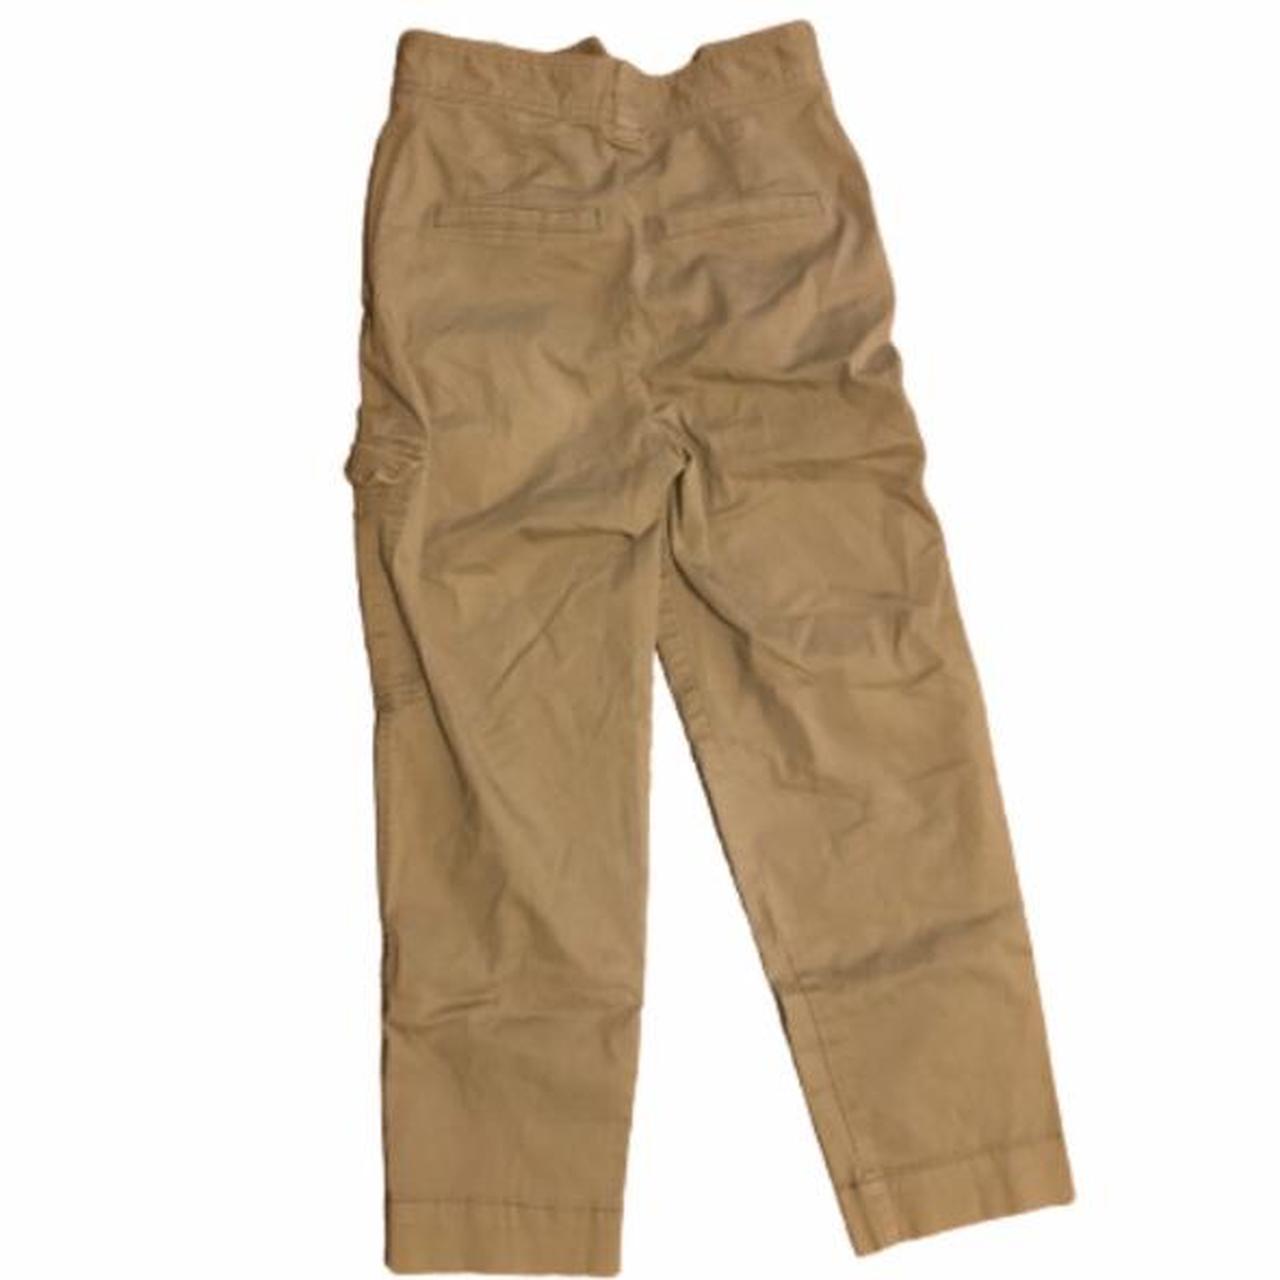 h&m high rise tan cargo pants fits small-medium - Depop